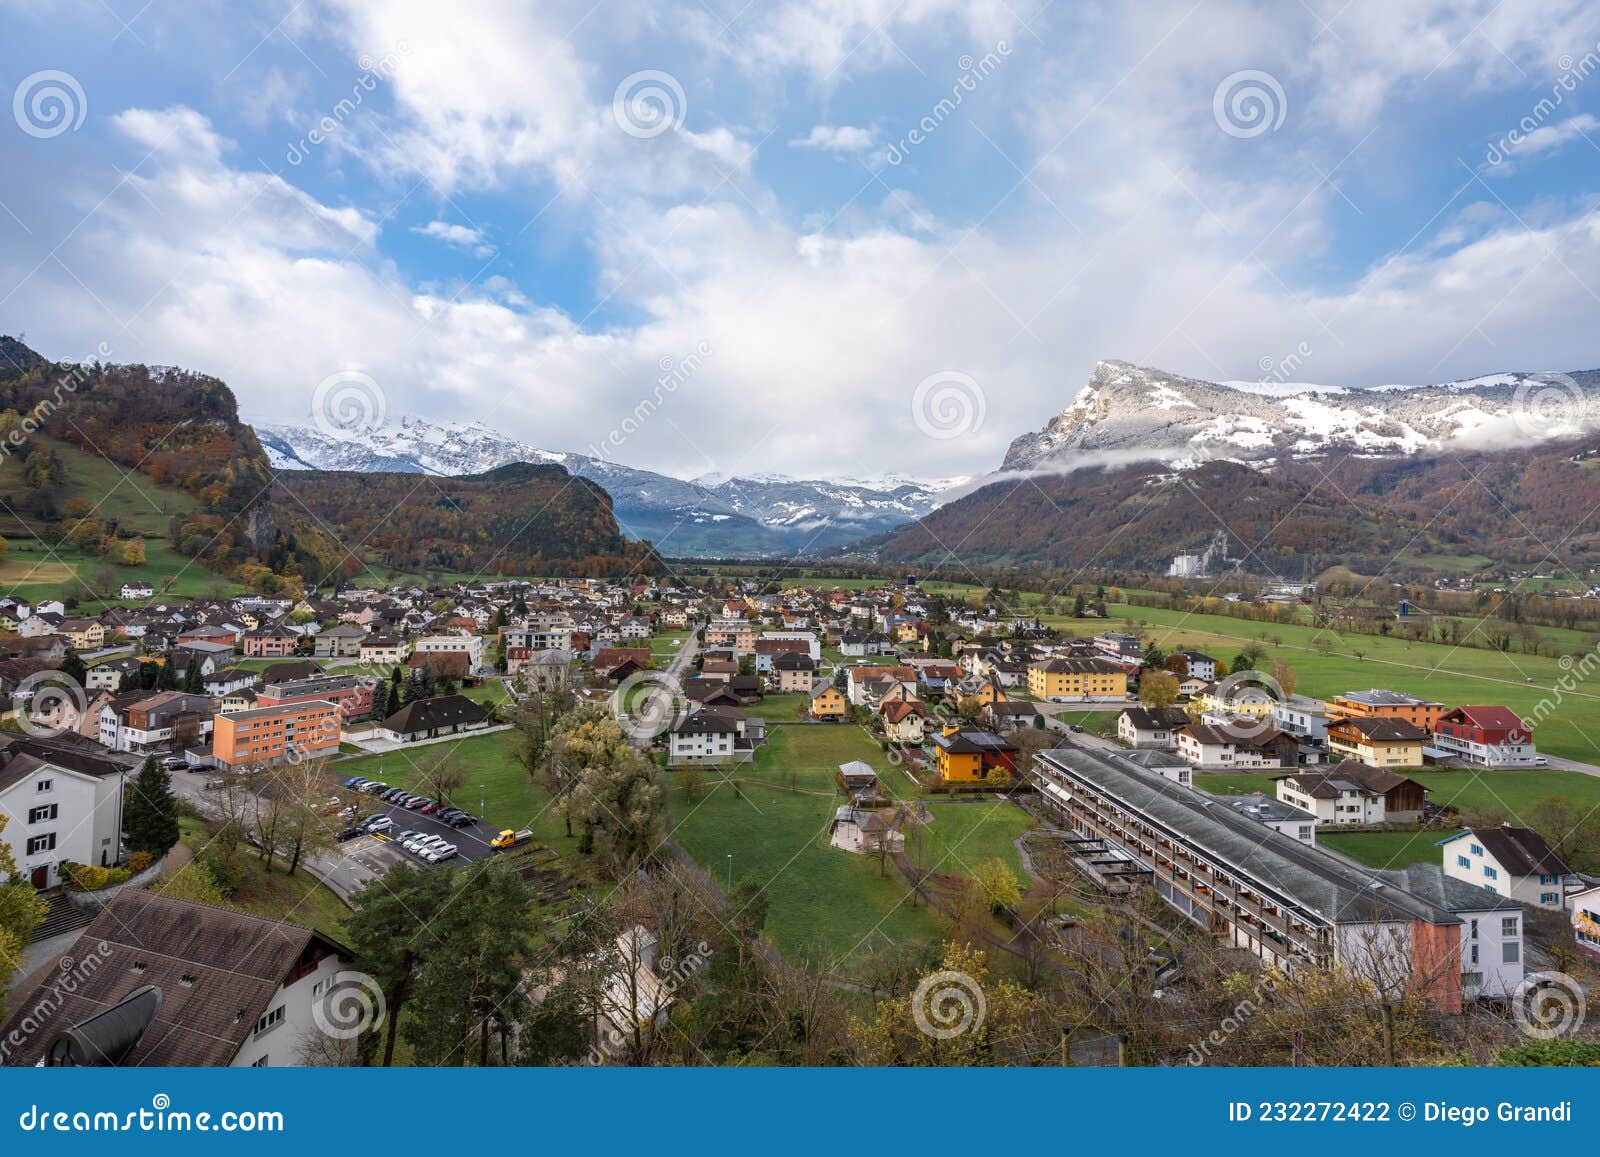 Aerial View of Balzers with Alps Mountains - Balzers, Liechtenstein ...